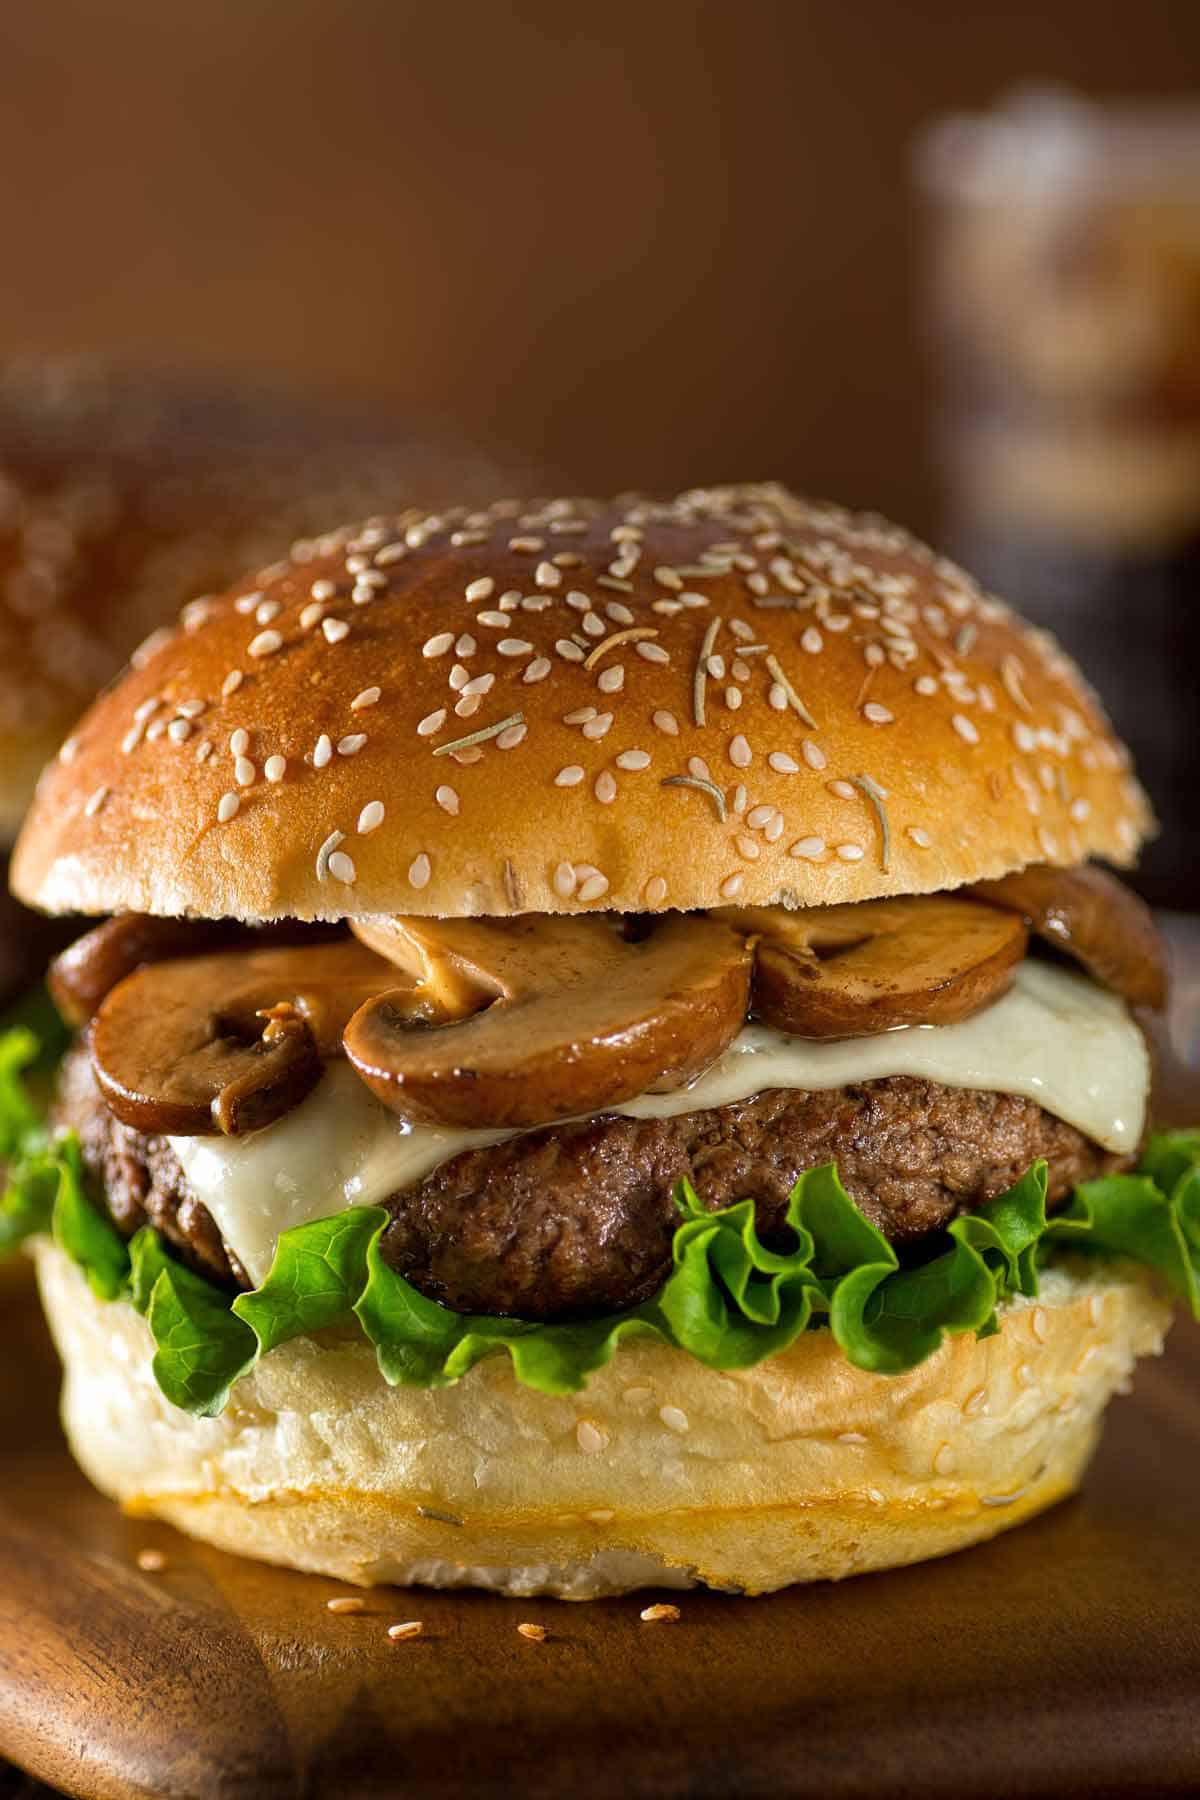 Mushroom Swiss burger served on a sesame seed bun.